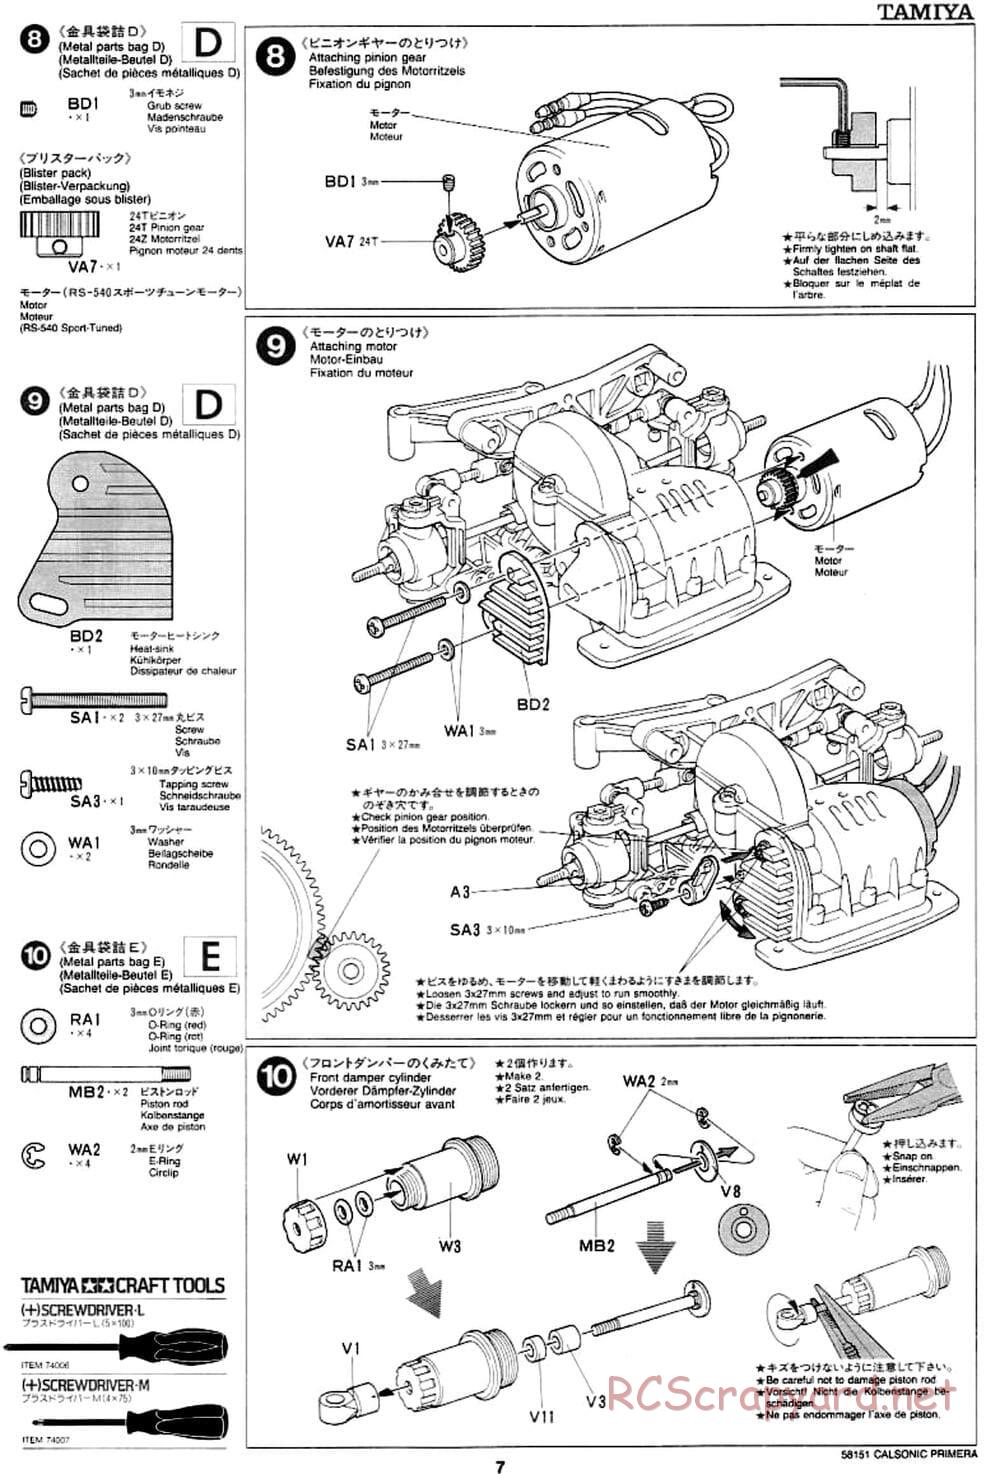 Tamiya - Calsonic Nissan Primera JTCC - FF-01 Chassis - Manual - Page 7